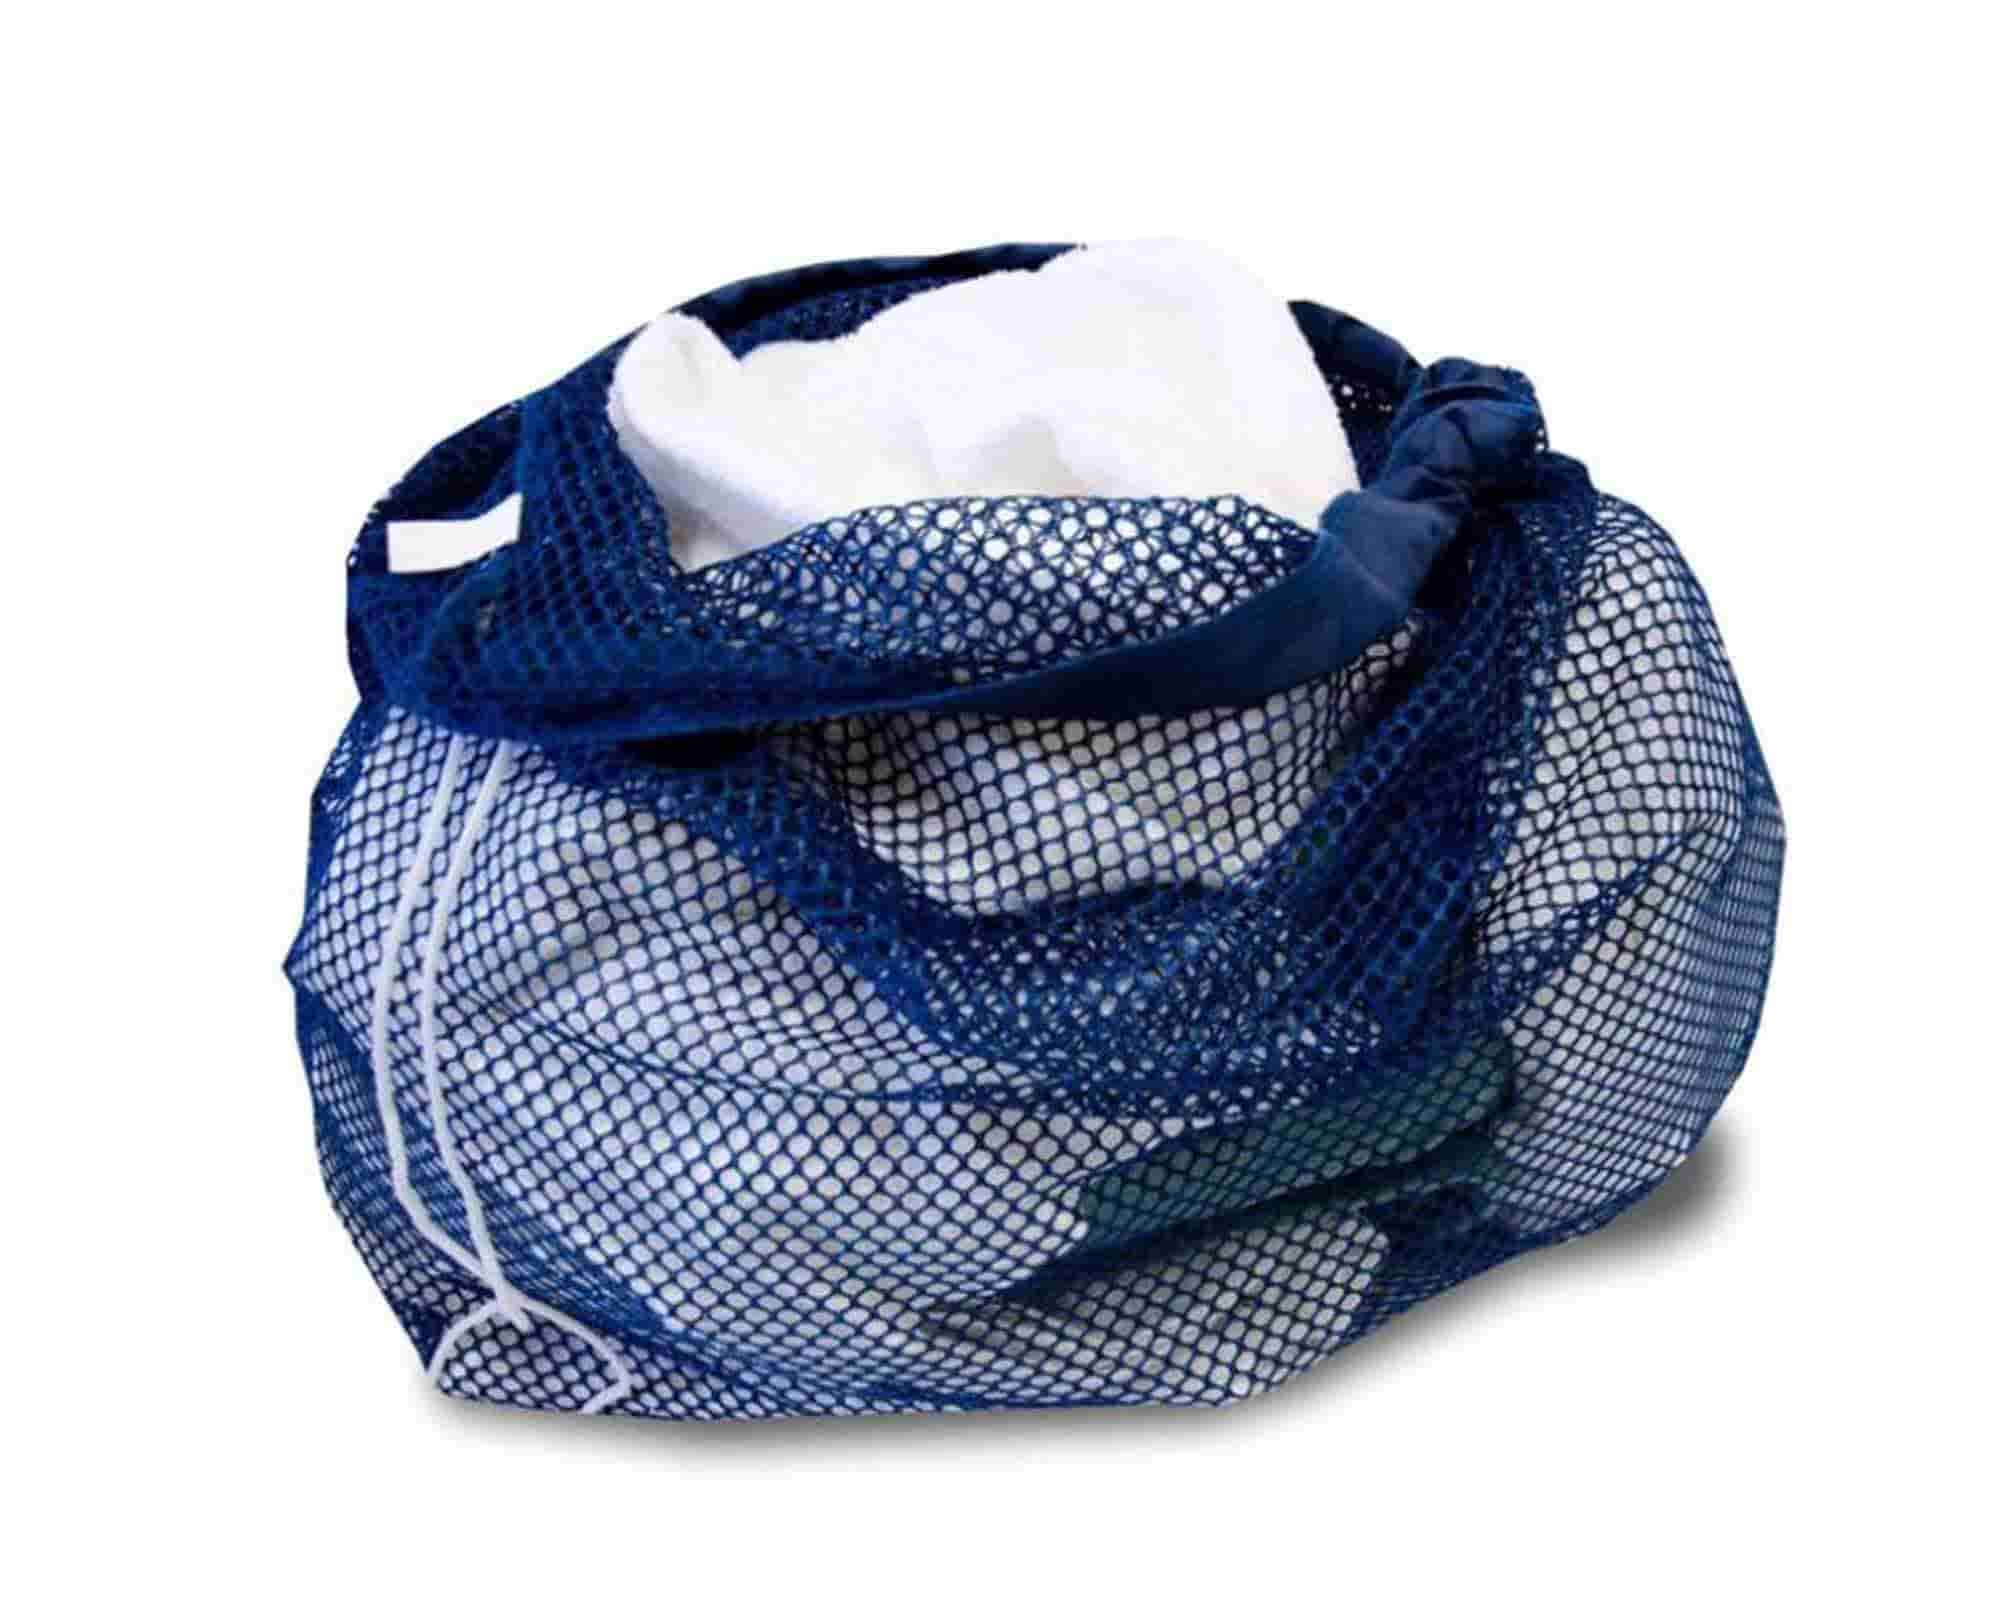  JMEXSUSS Premium Laundry Bag Mesh Wash Bags for Wash